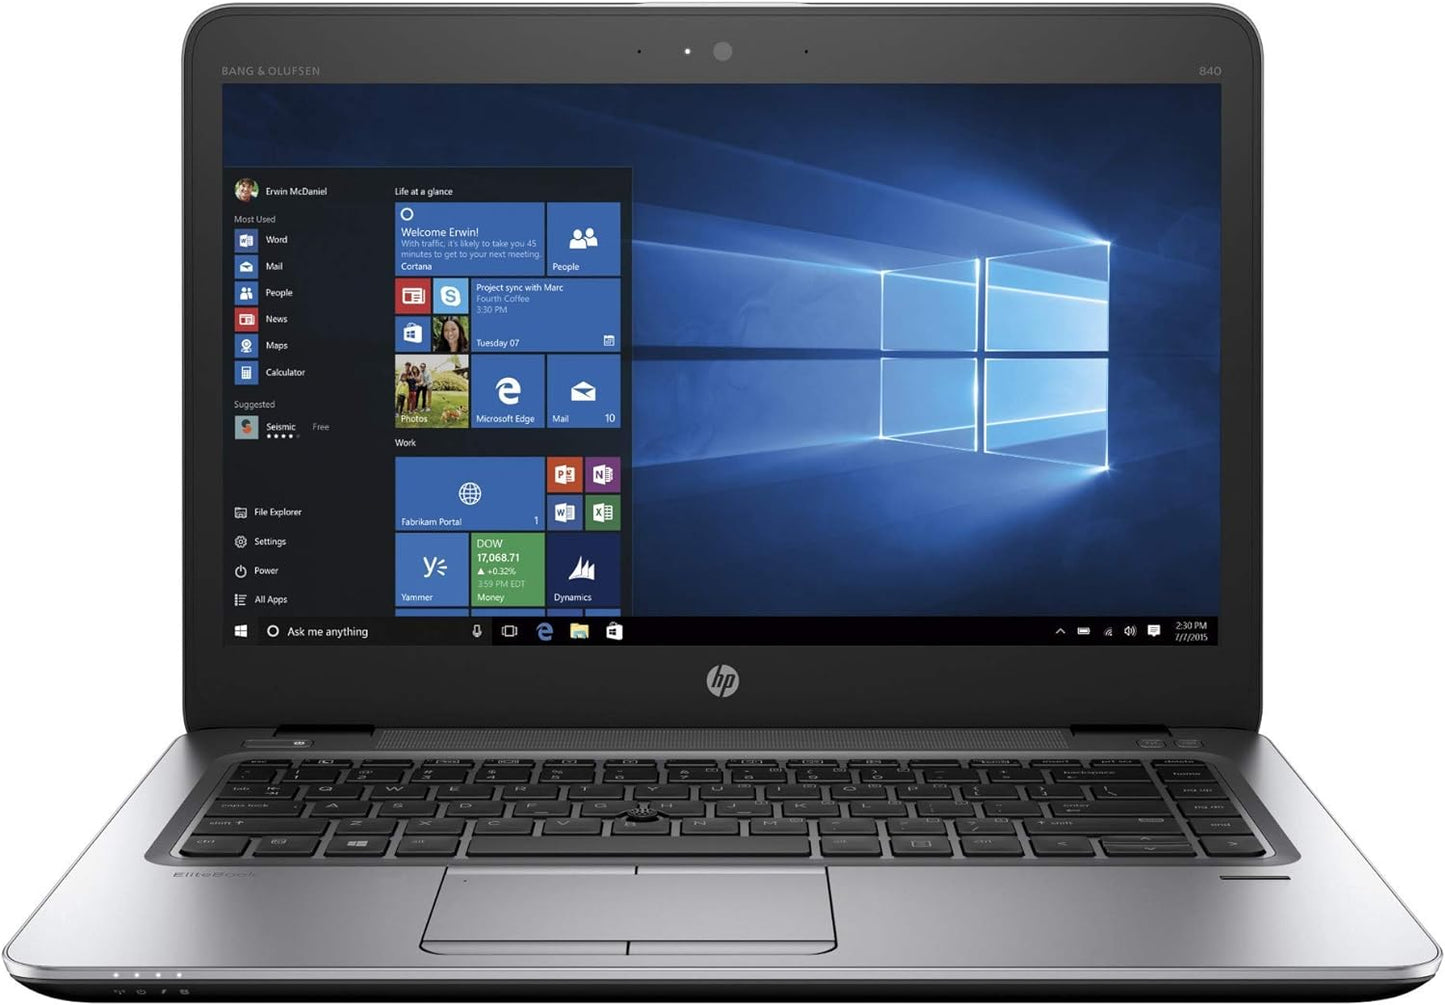 HP EliteBook 840 G3 14 inches Laptop - Core i5 2.3GHz CPU, 8GB RAM, 256GB SSD, Windows 10 Pro (unsealed)